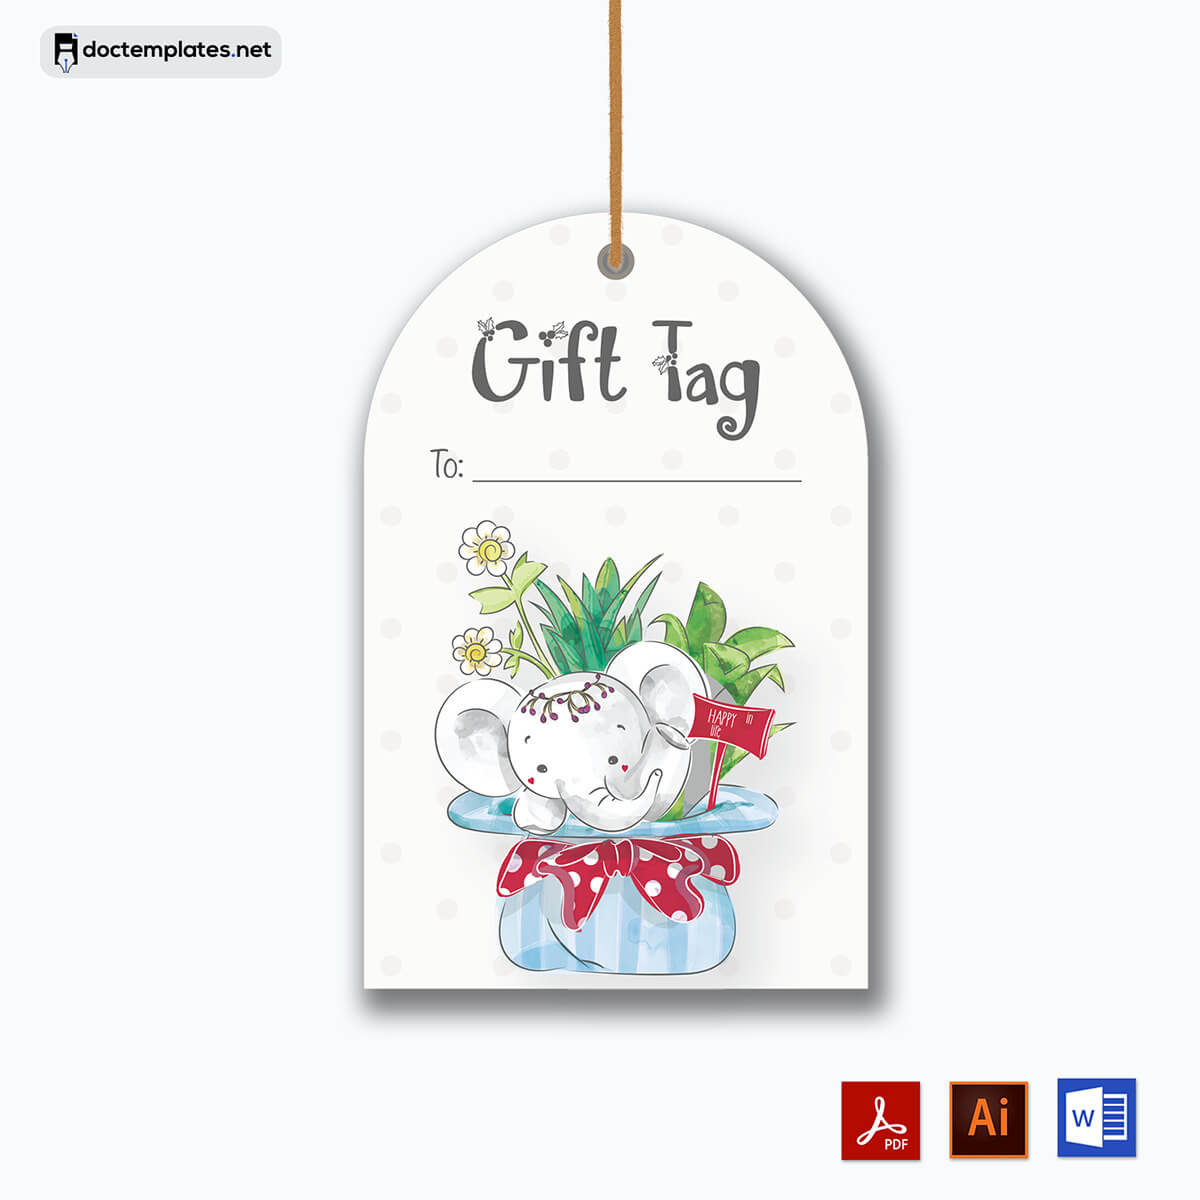 Premium Gift Tag Templates - Ready for Adobe Illustrator